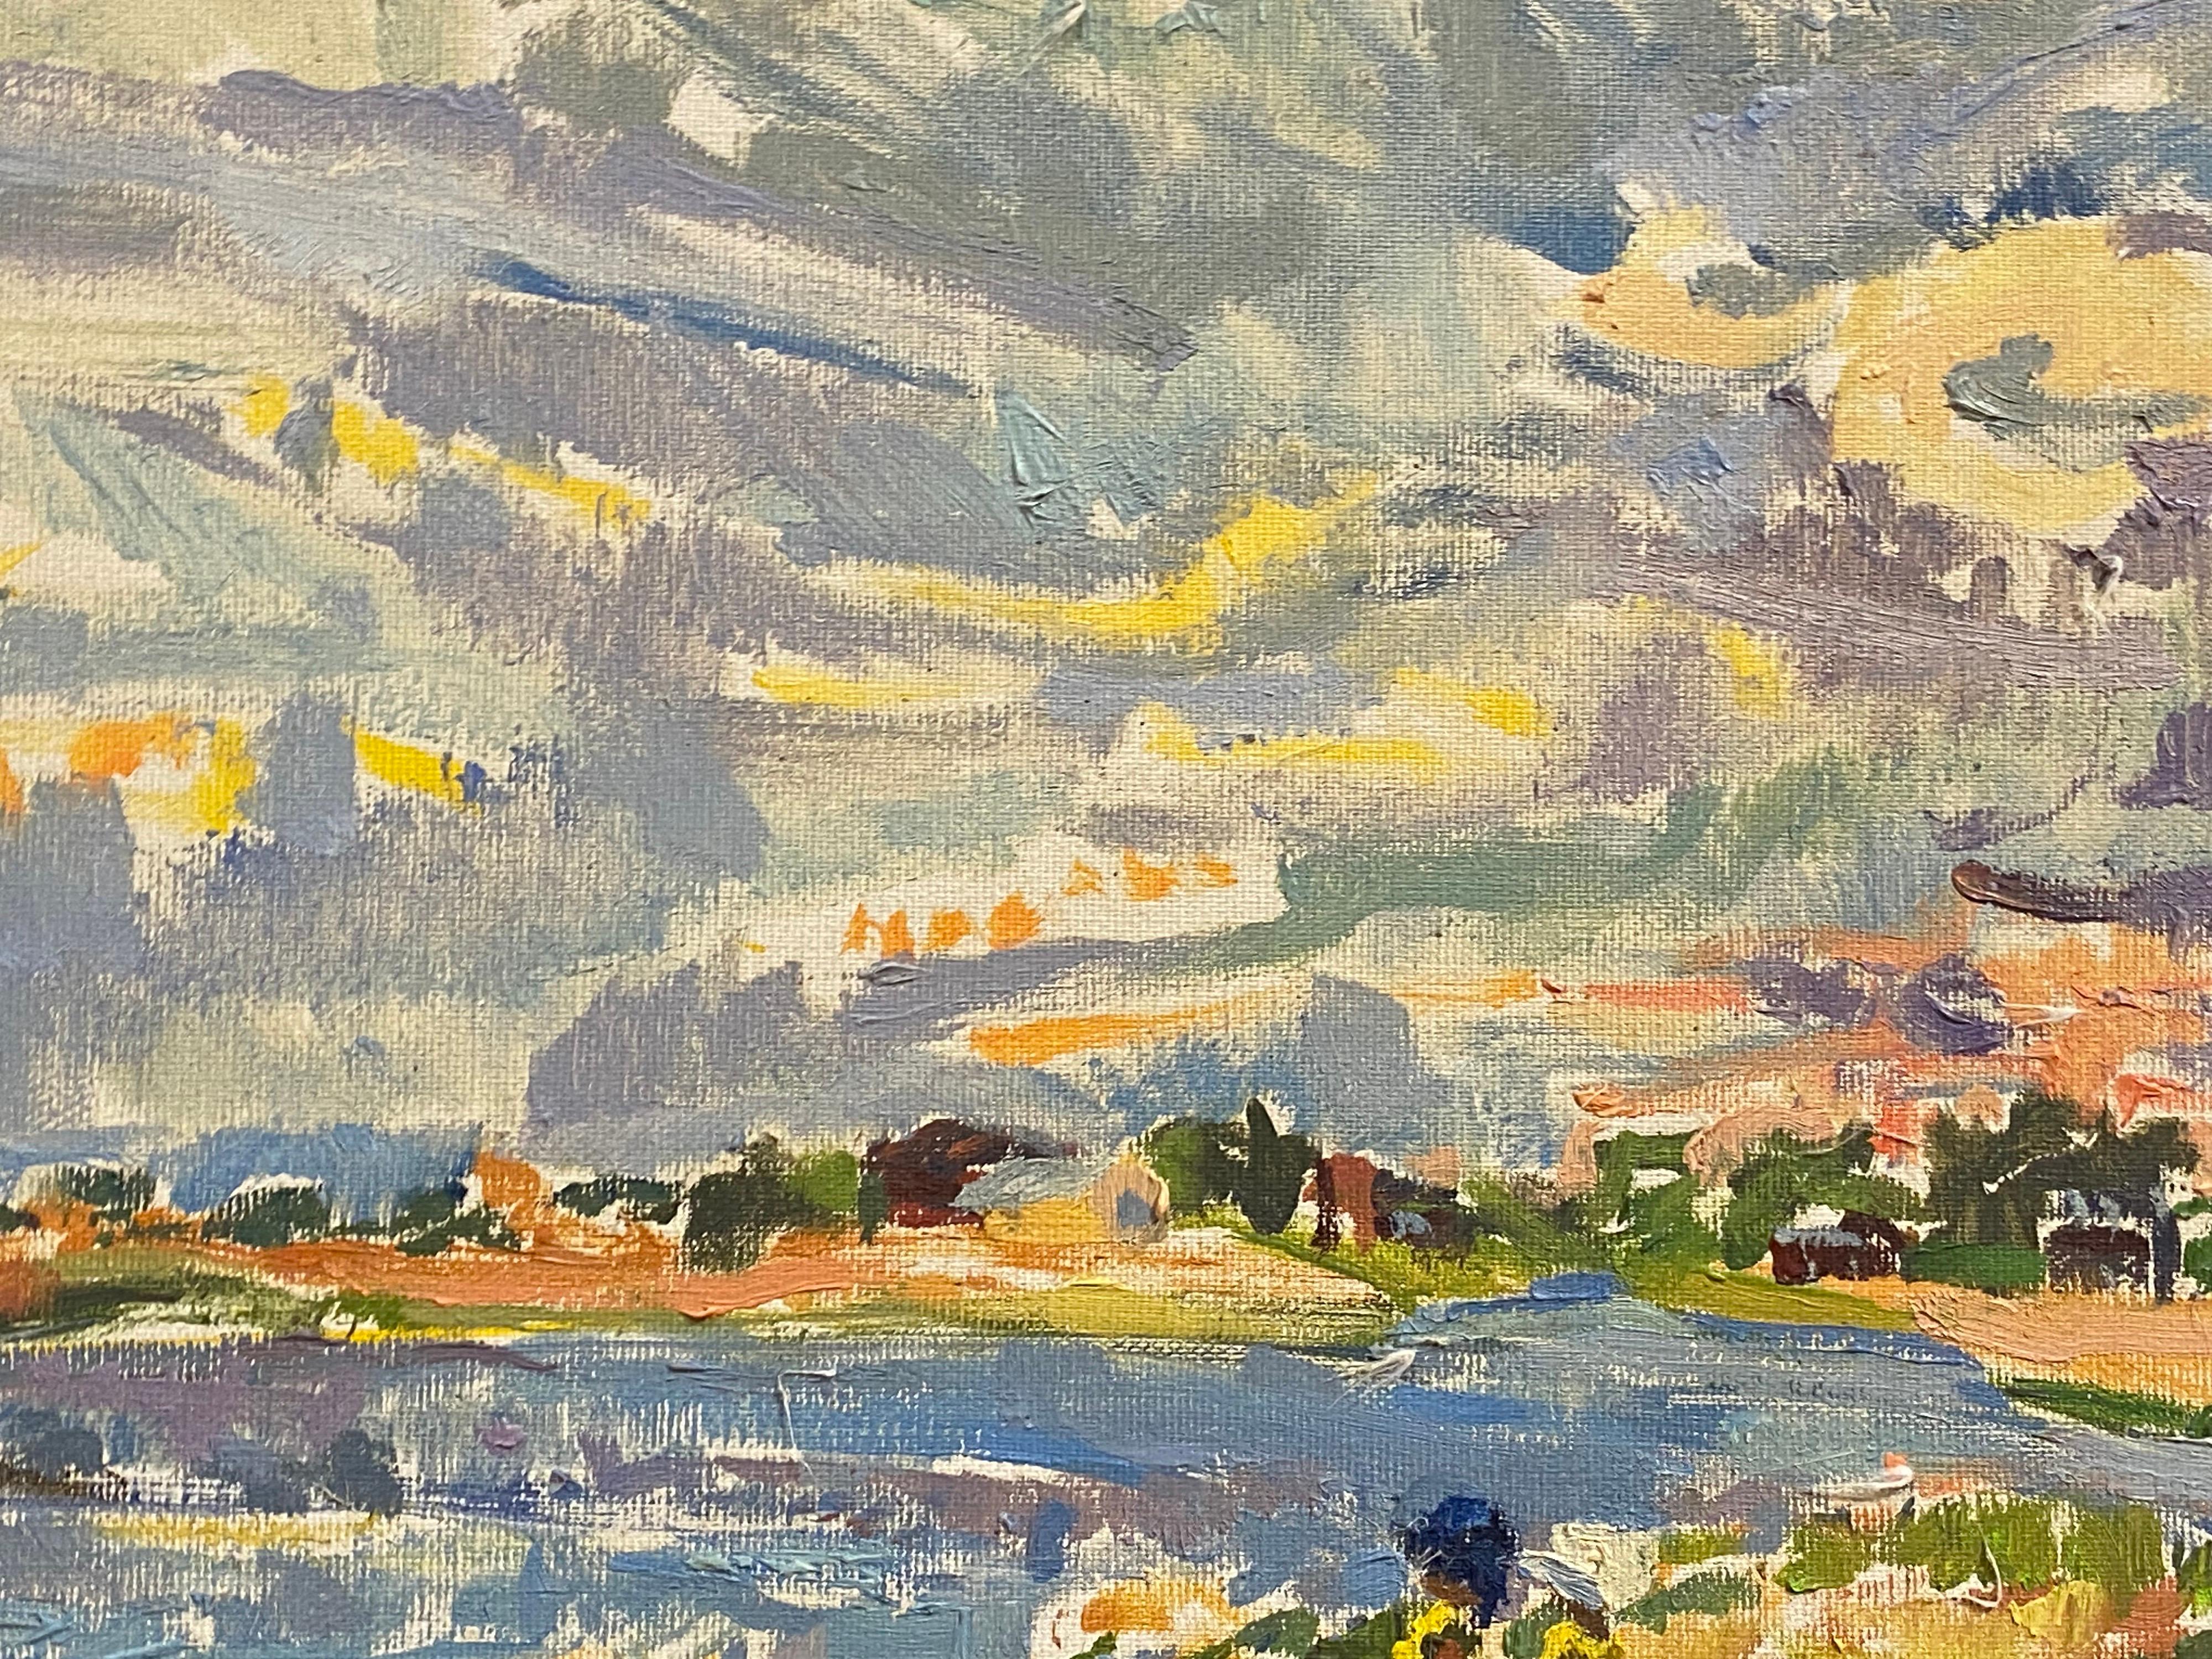  Impressionist Oil Painting - Blue Tranquil Lake Landscape - Beige Abstract Painting by Douglas Stuart Allen